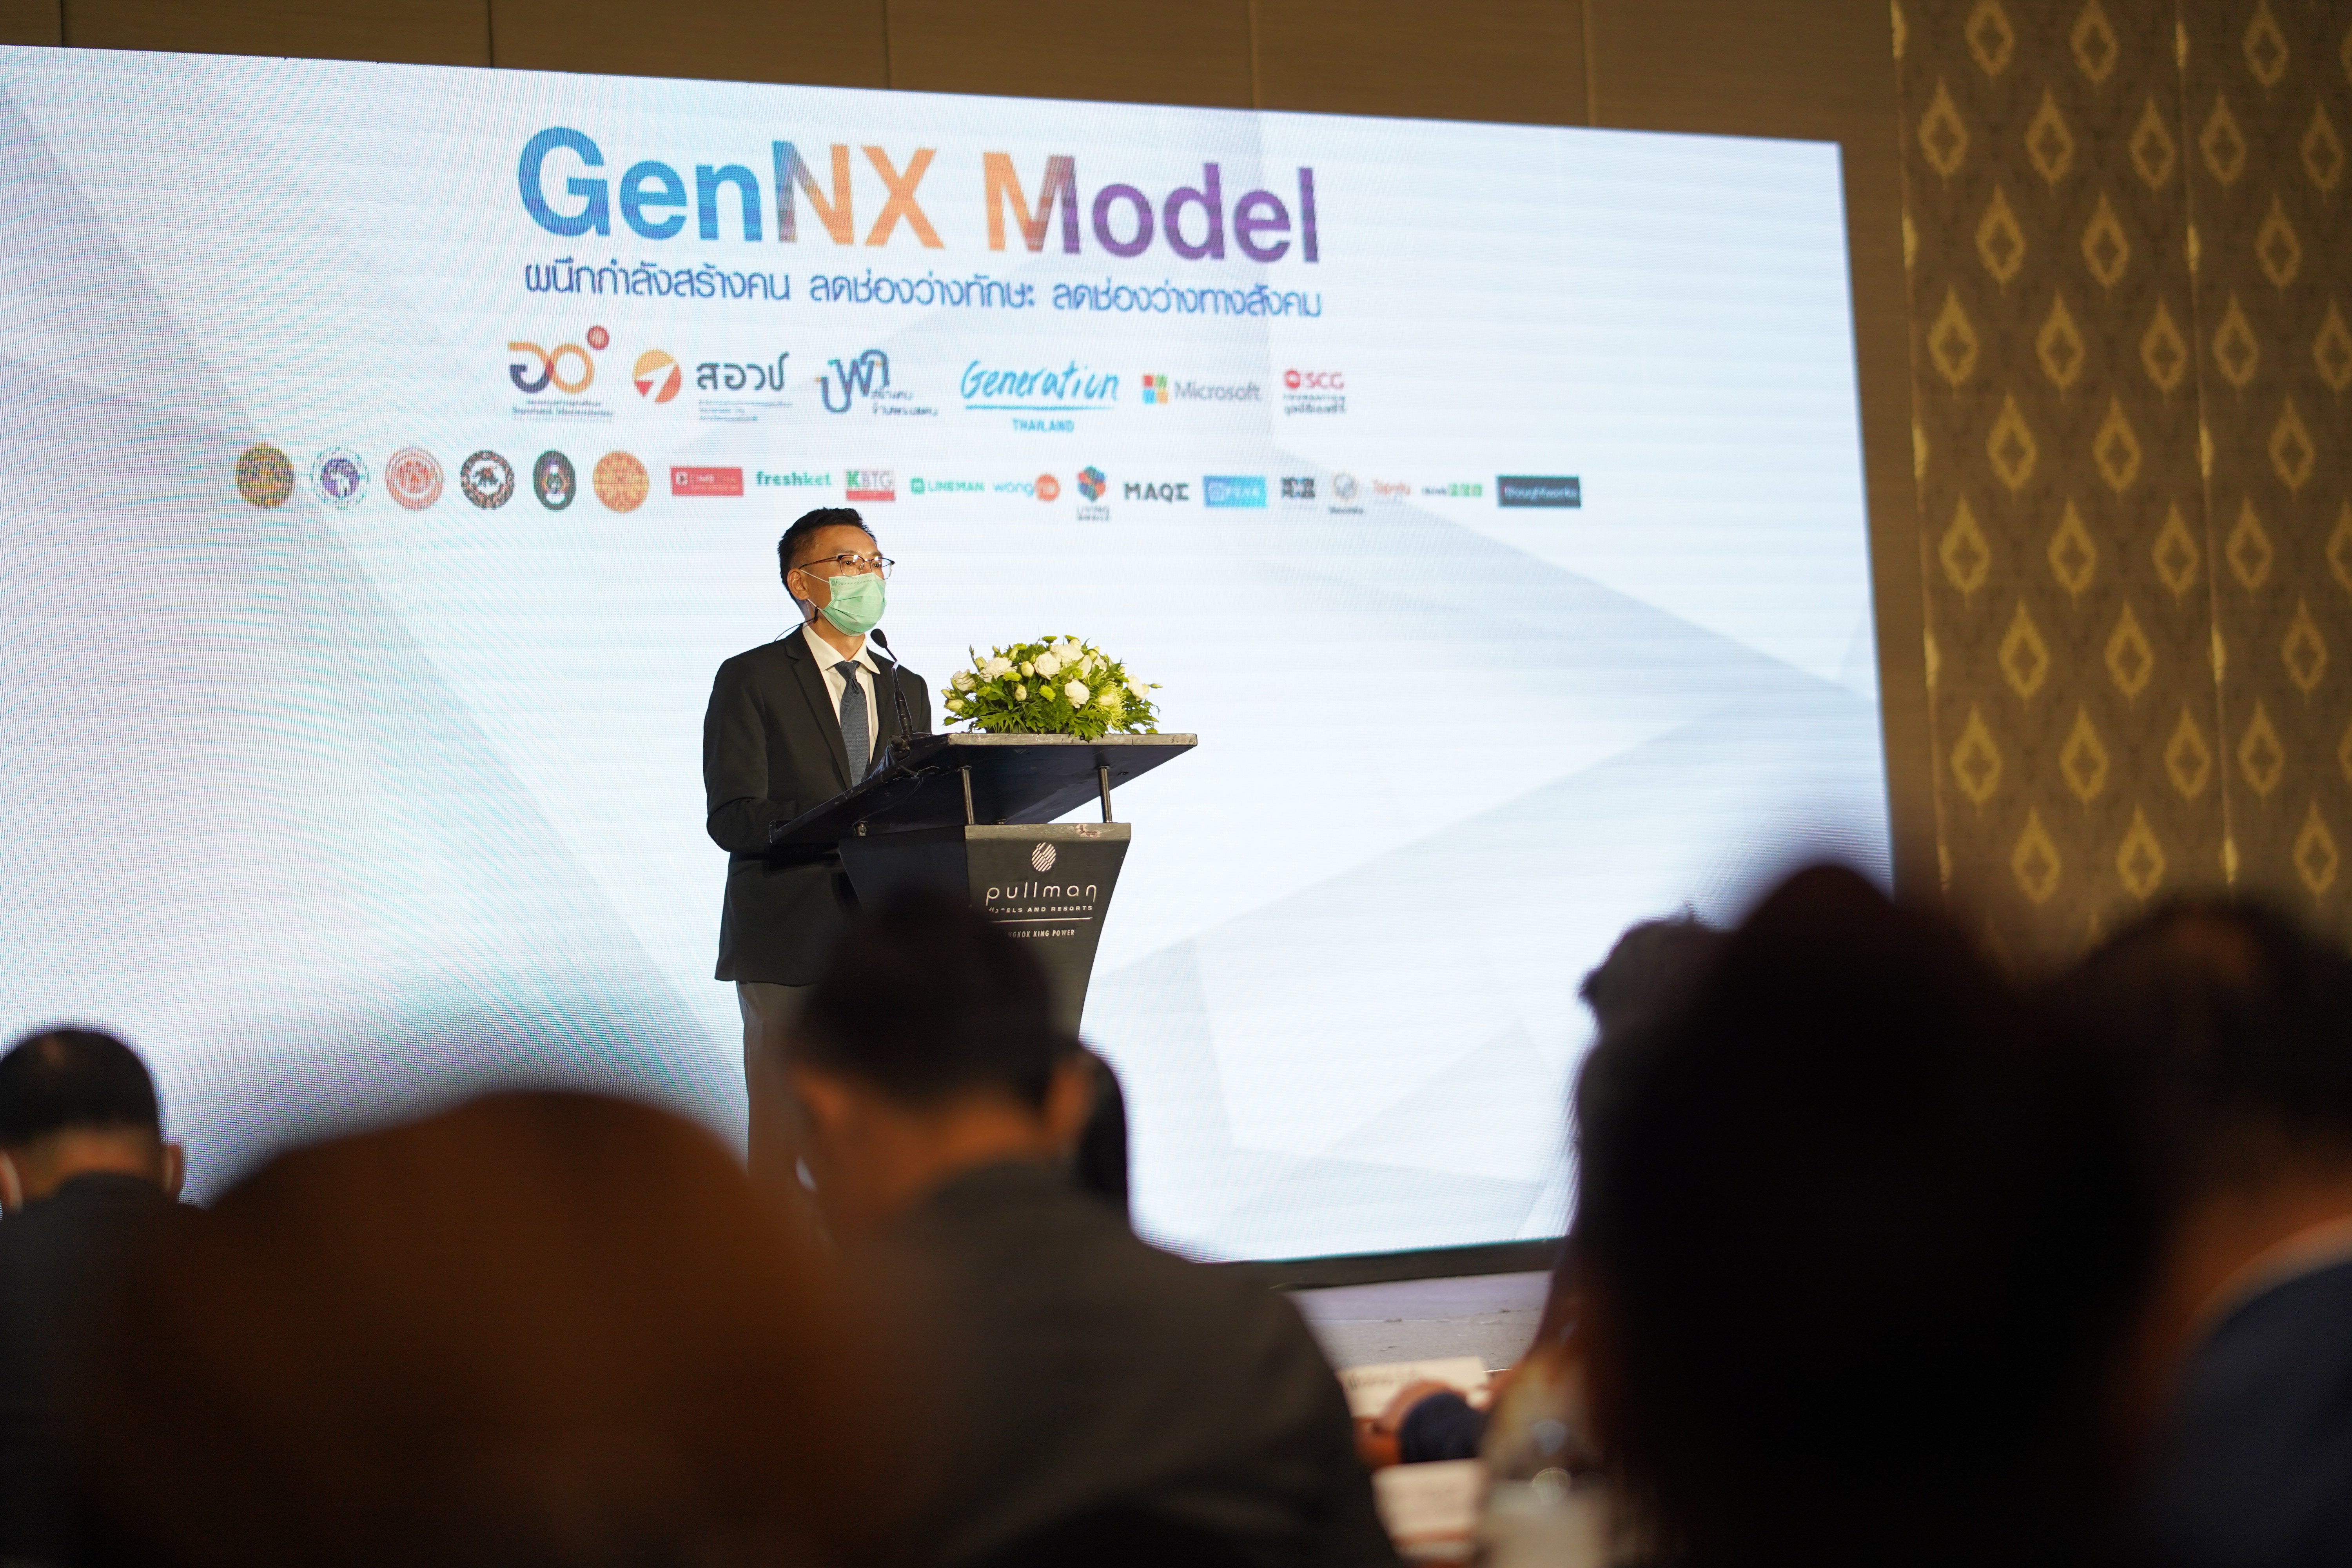 Presenting at GenNX